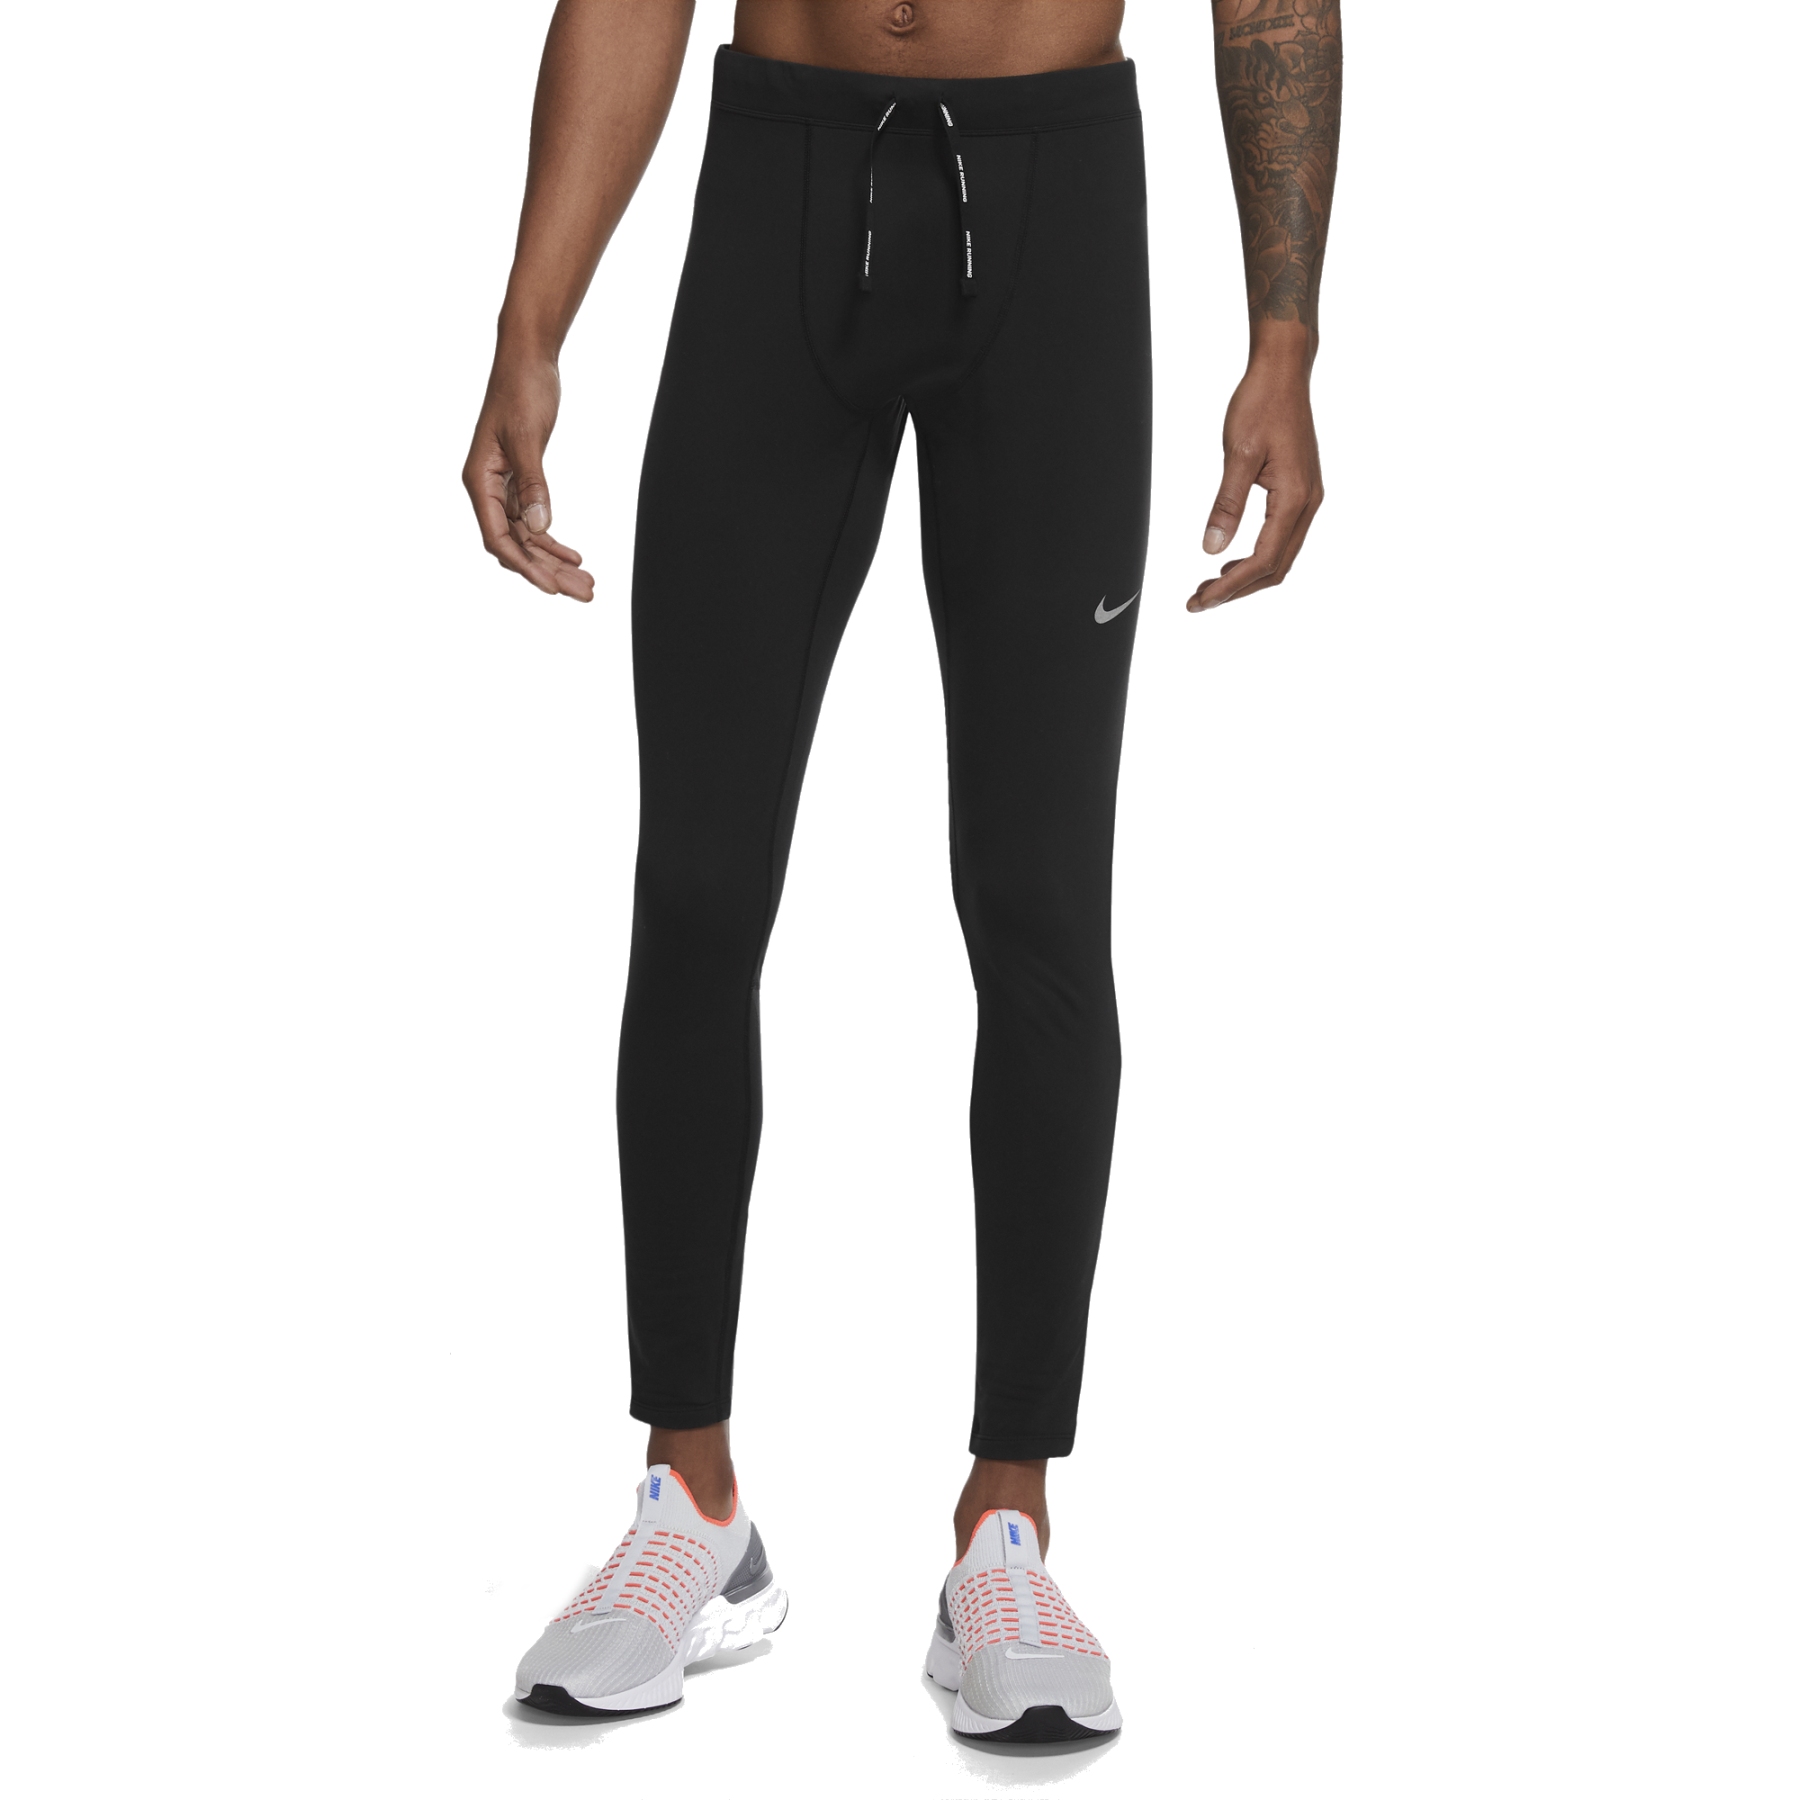 Productfoto van Nike Repel Challenger Mens Running Tights - black/reflective silver DD6700-010